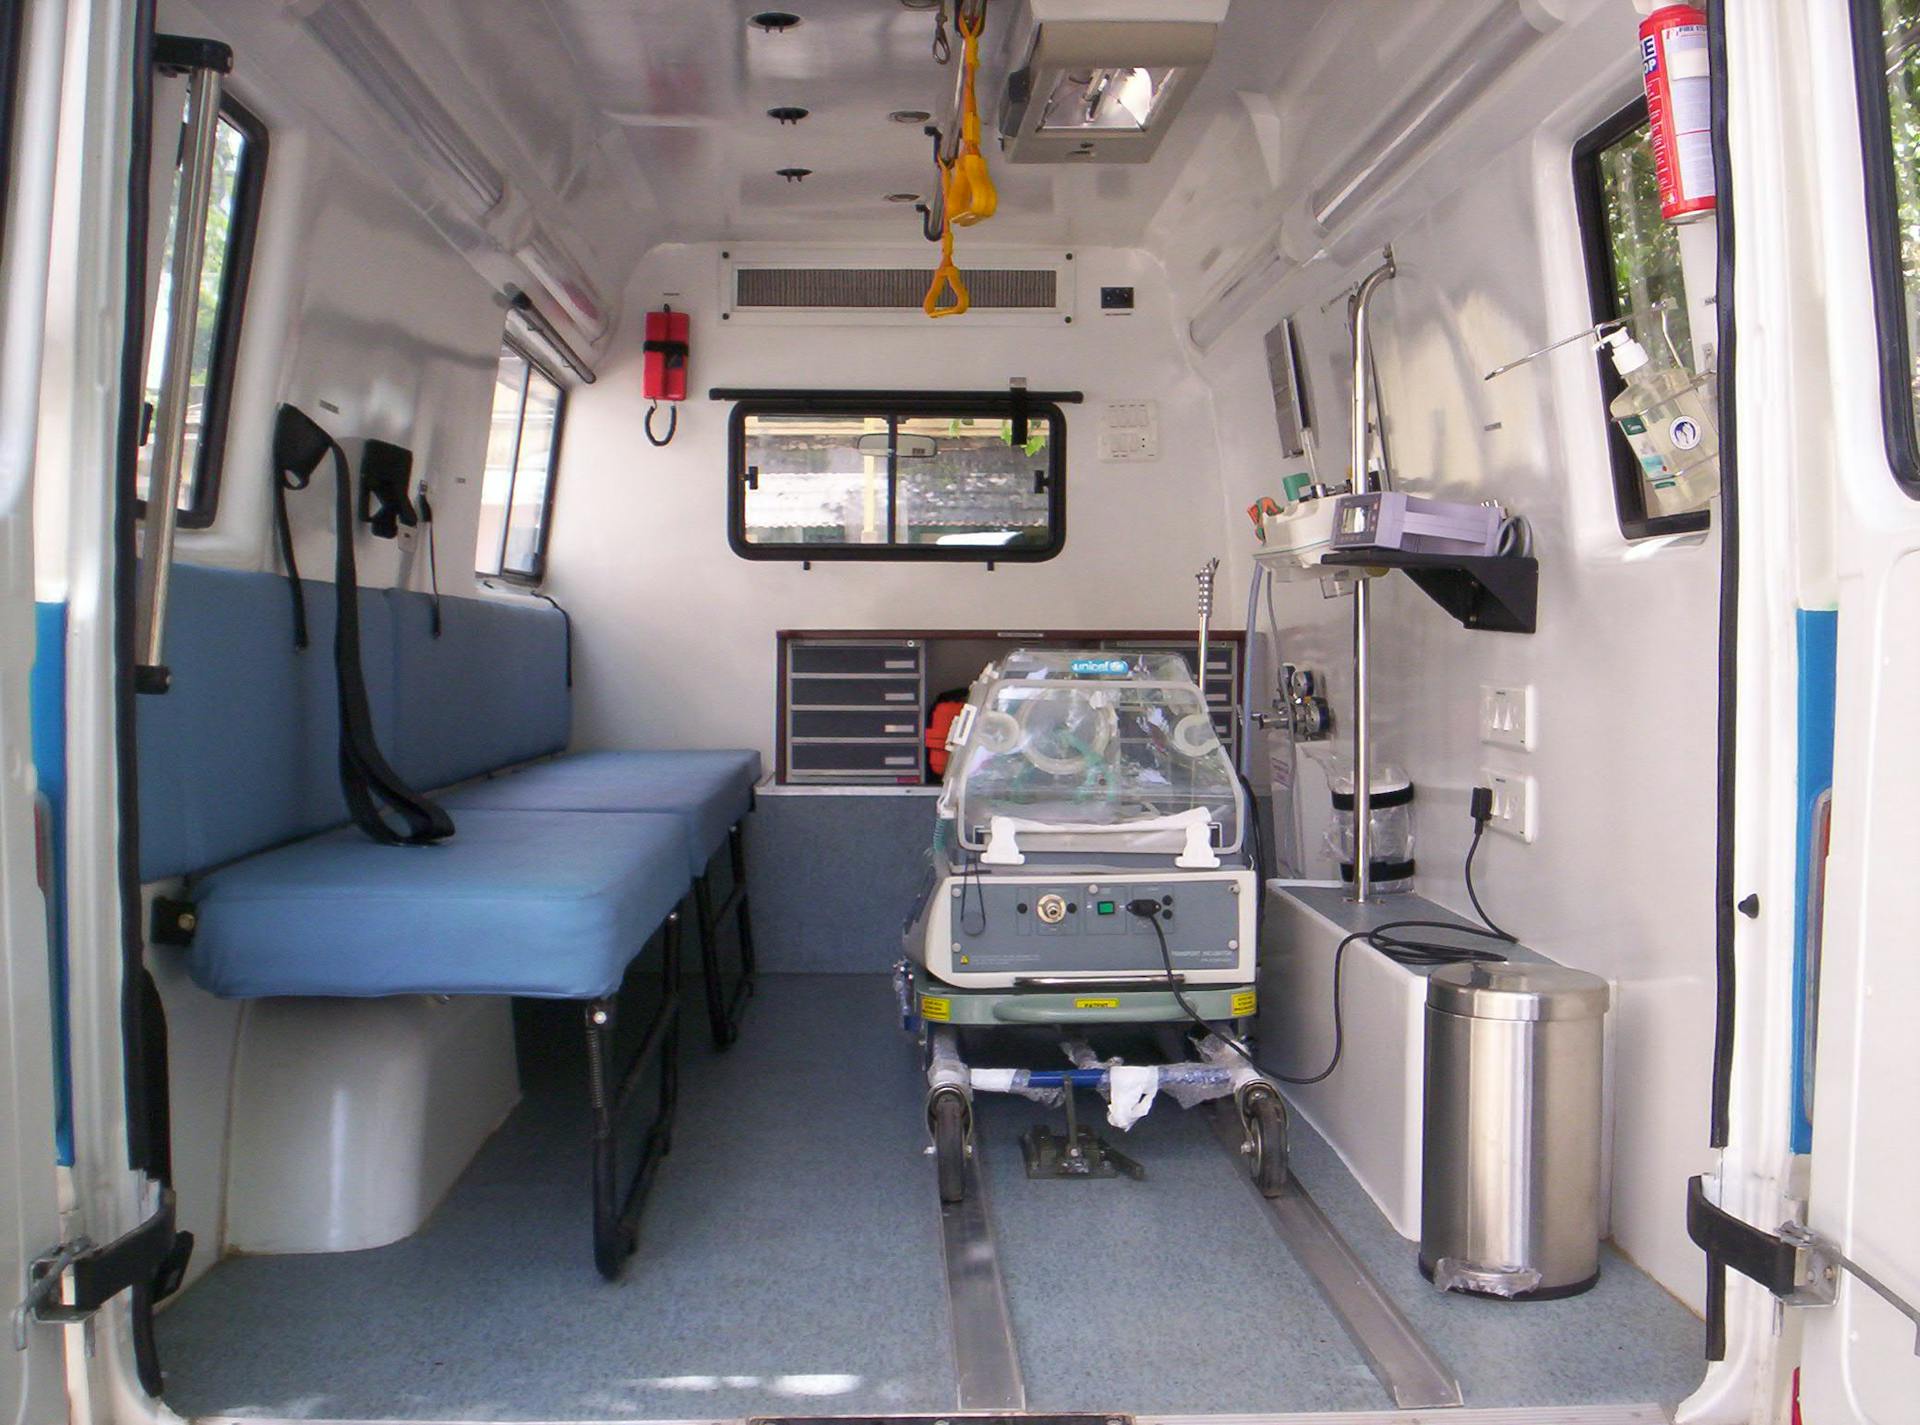 Compact Phoenix transport incubator in an ambulance